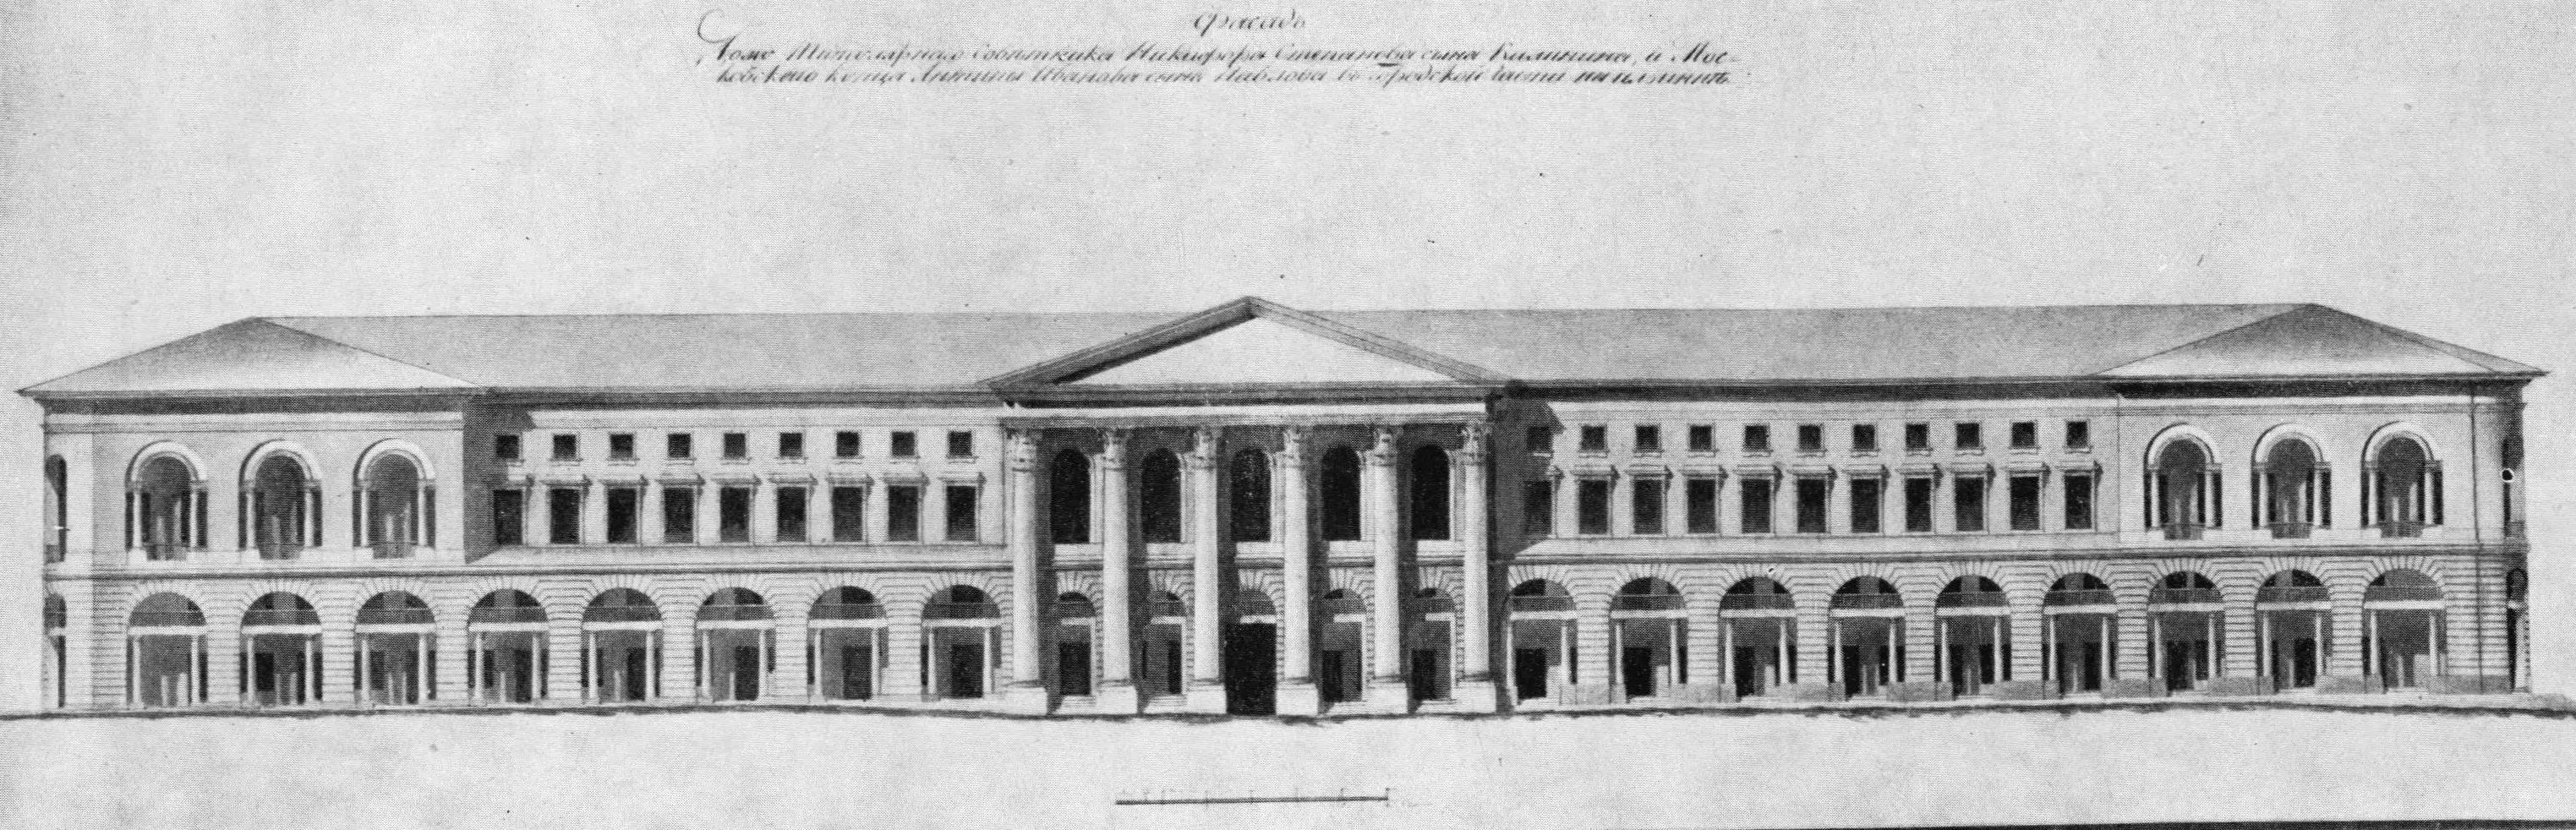 Дом Калинина и Павлова на Ильинке, фасад, чертеж М. Ф. Казакова, 1801-1803 гг.